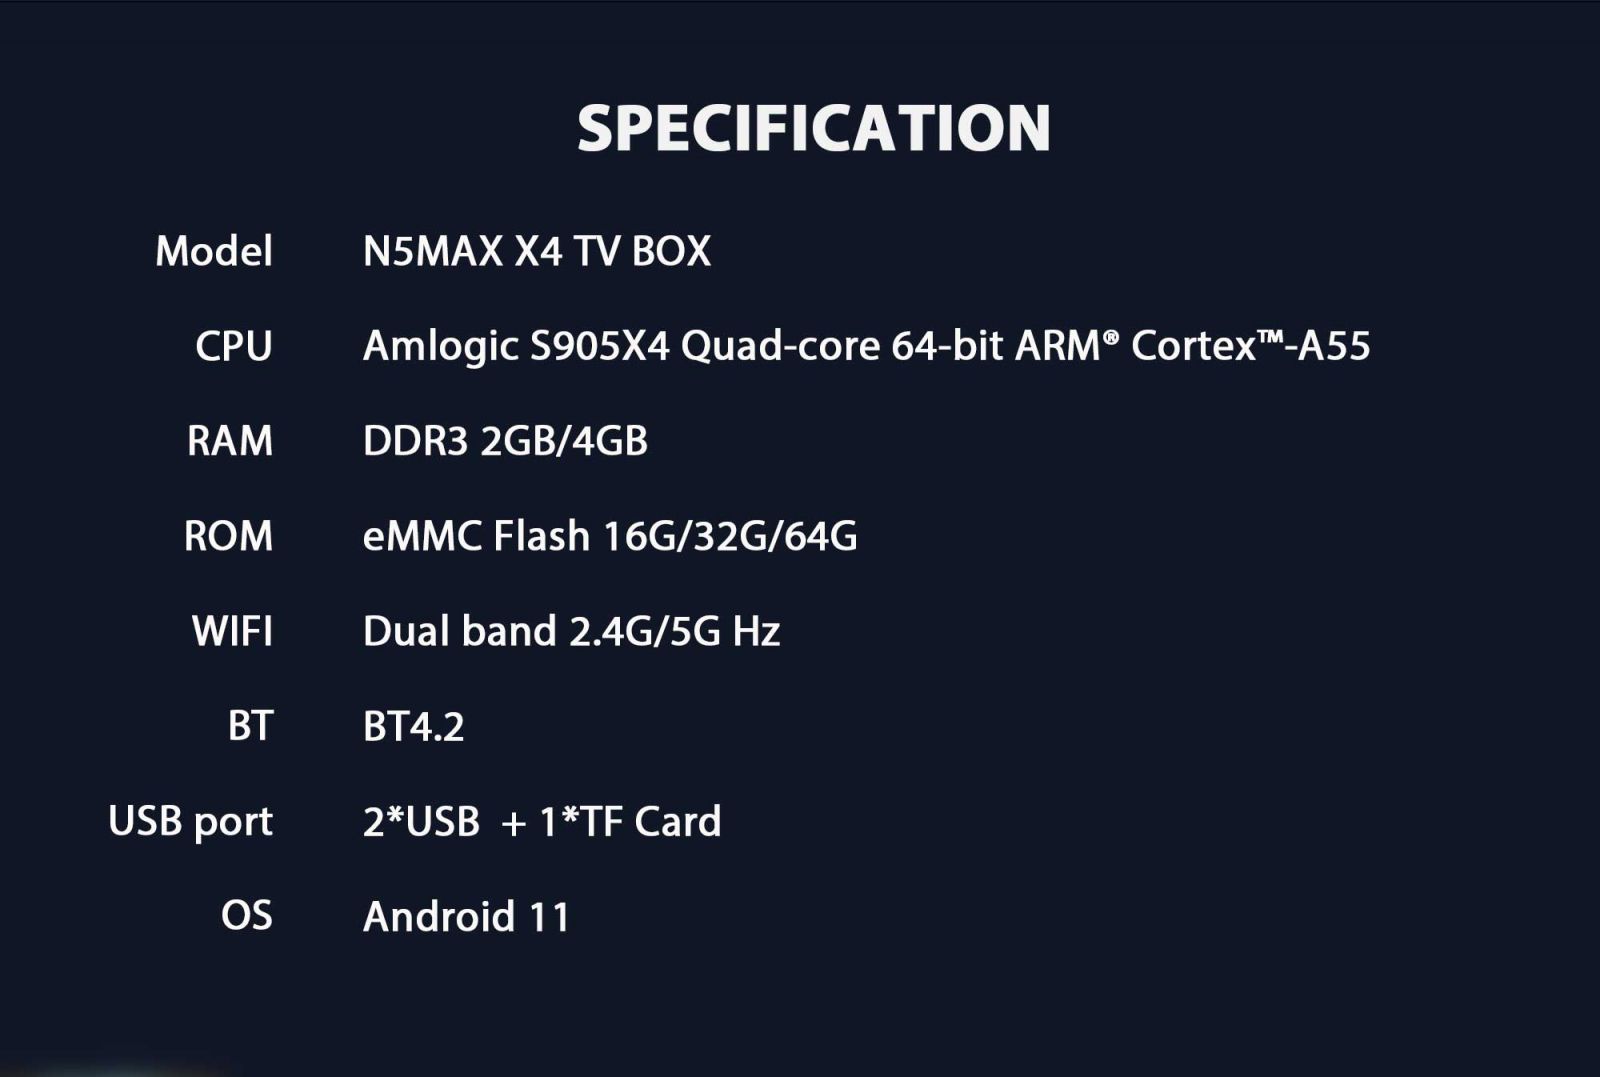 Android Tivi Box Magicsee N5 max X4 phiên bản 2022 - Ram 4GB, Rom 32GB, Amlogic S905X4 - Android 11